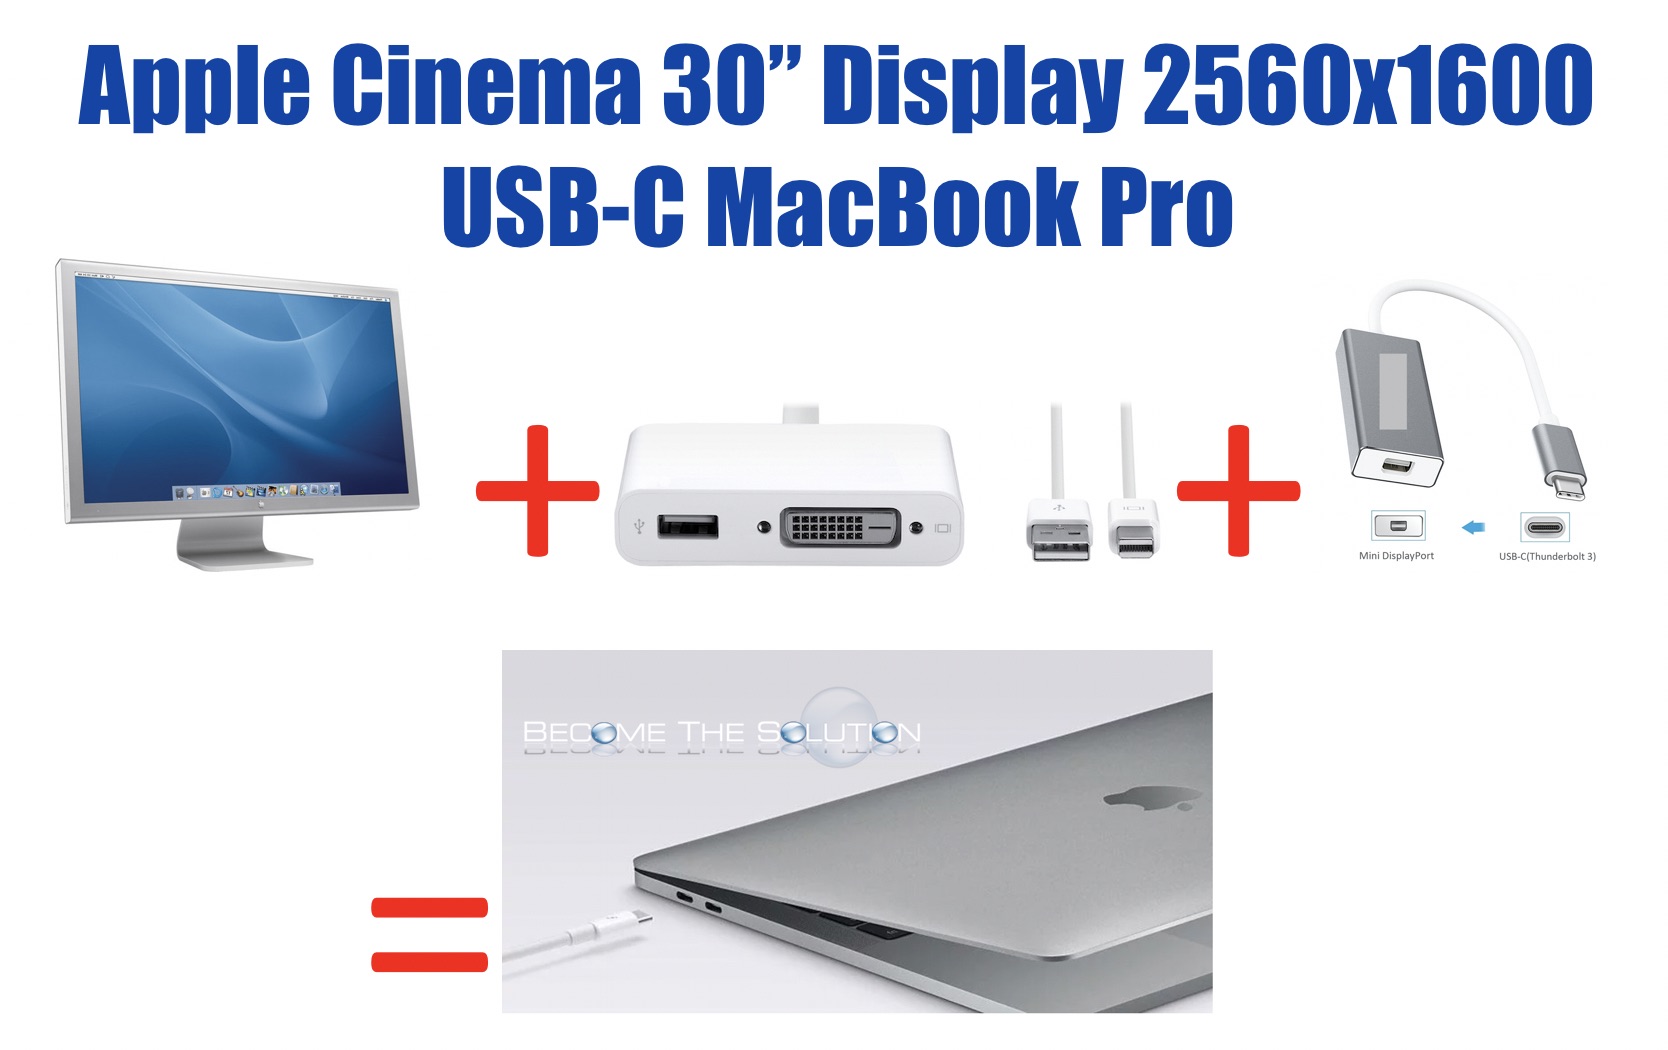 Use Apple Cinema Display 30-inch (Full Resolution) with USB-C 